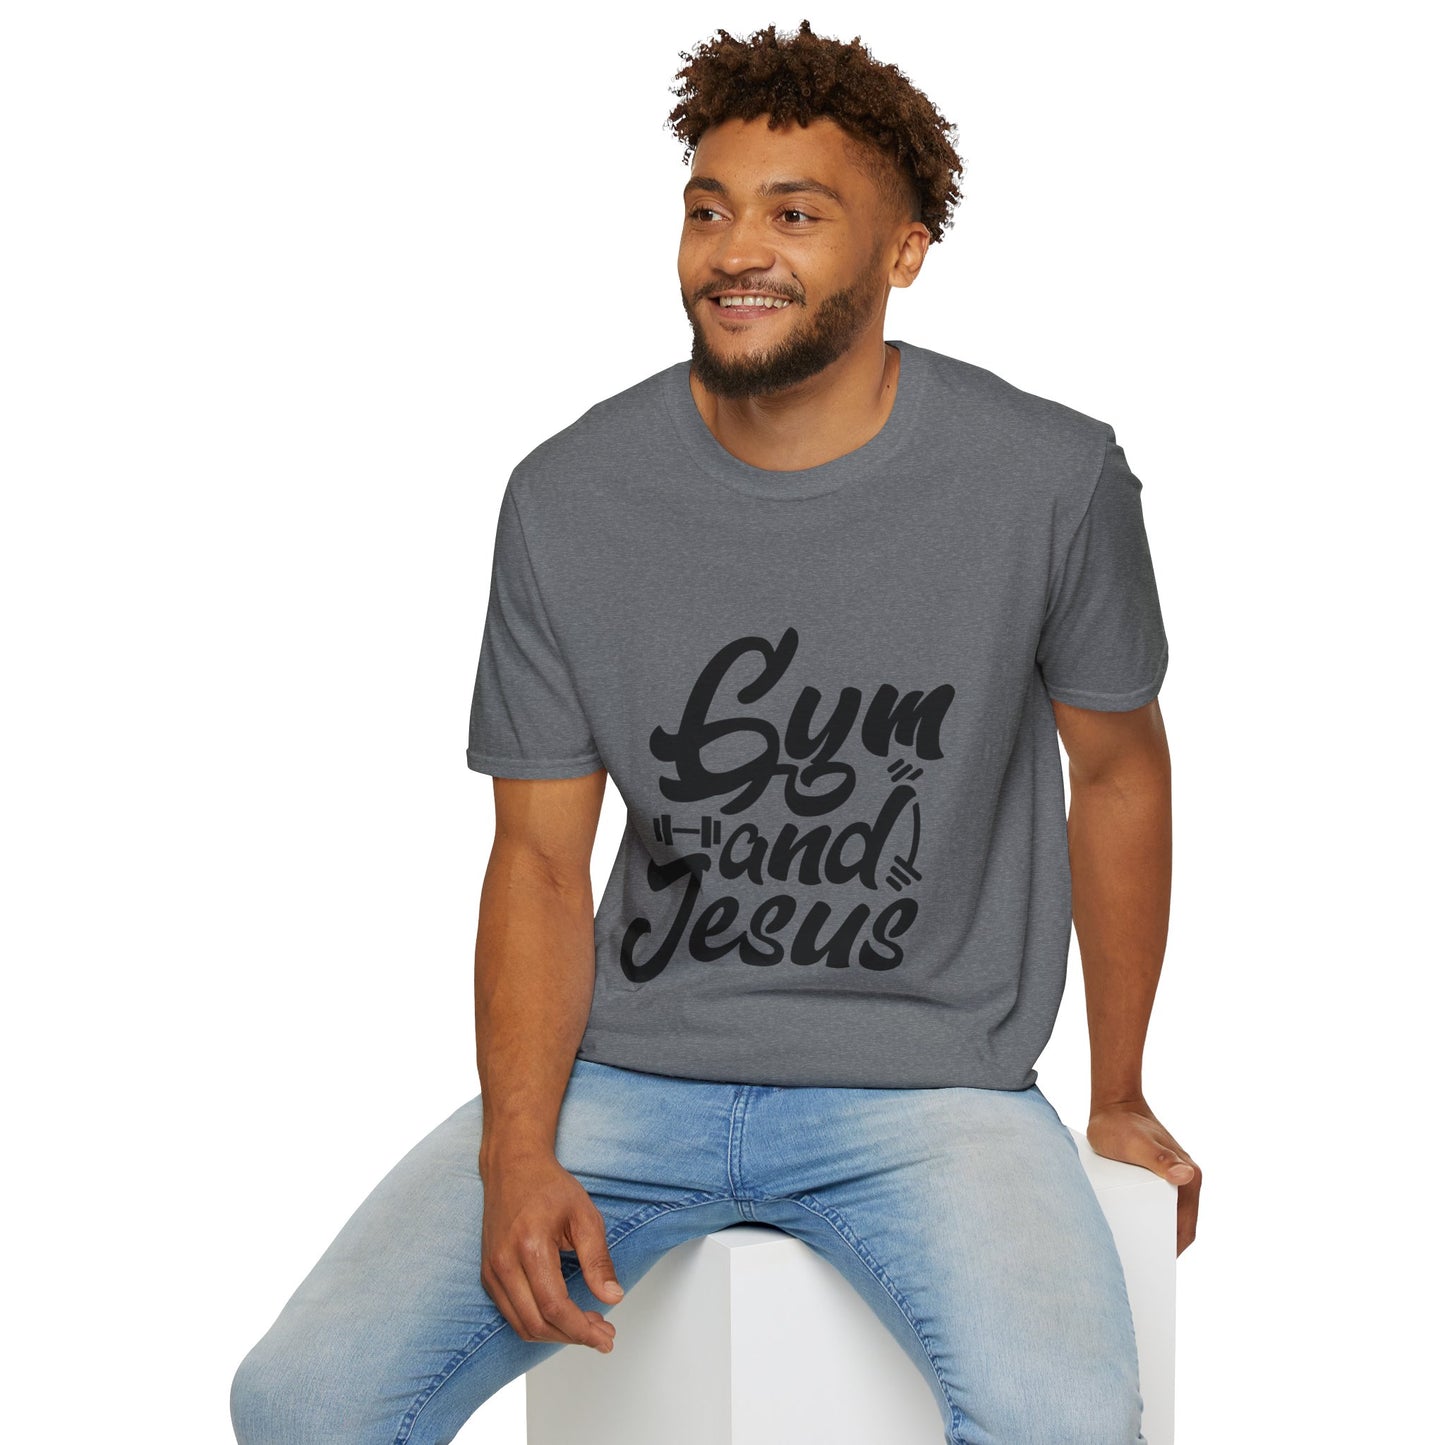 Gym and Jesus Men's Tshirt (Black Logo)